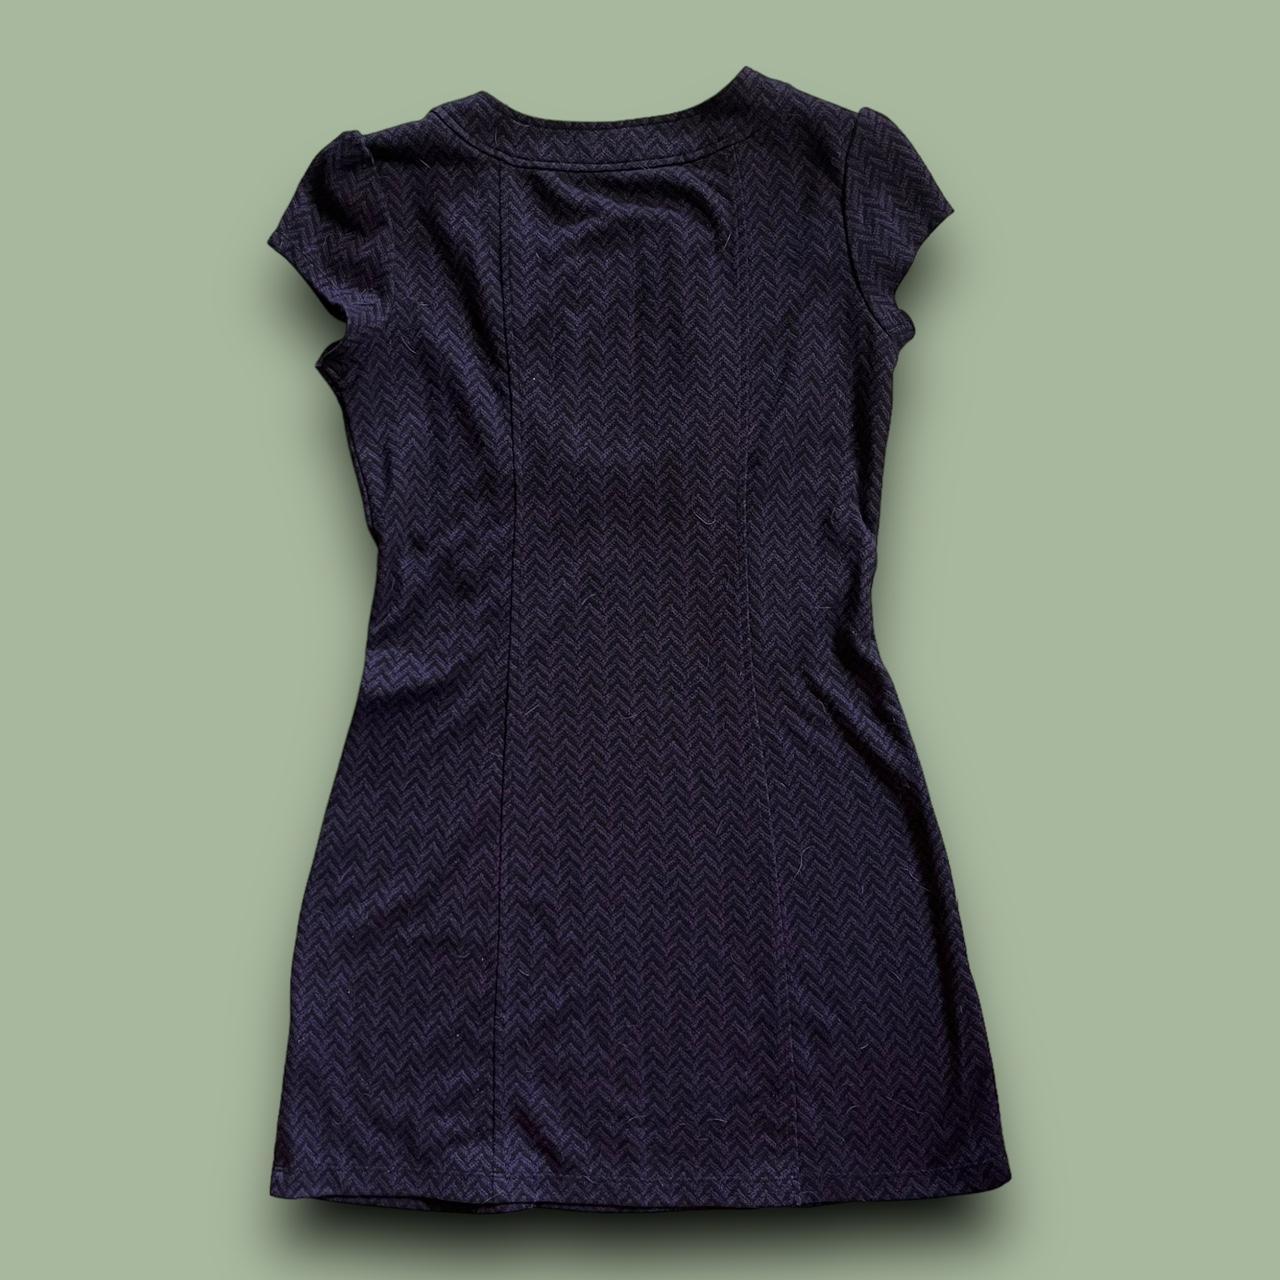 BeBop Women's Purple and Black Dress (4)